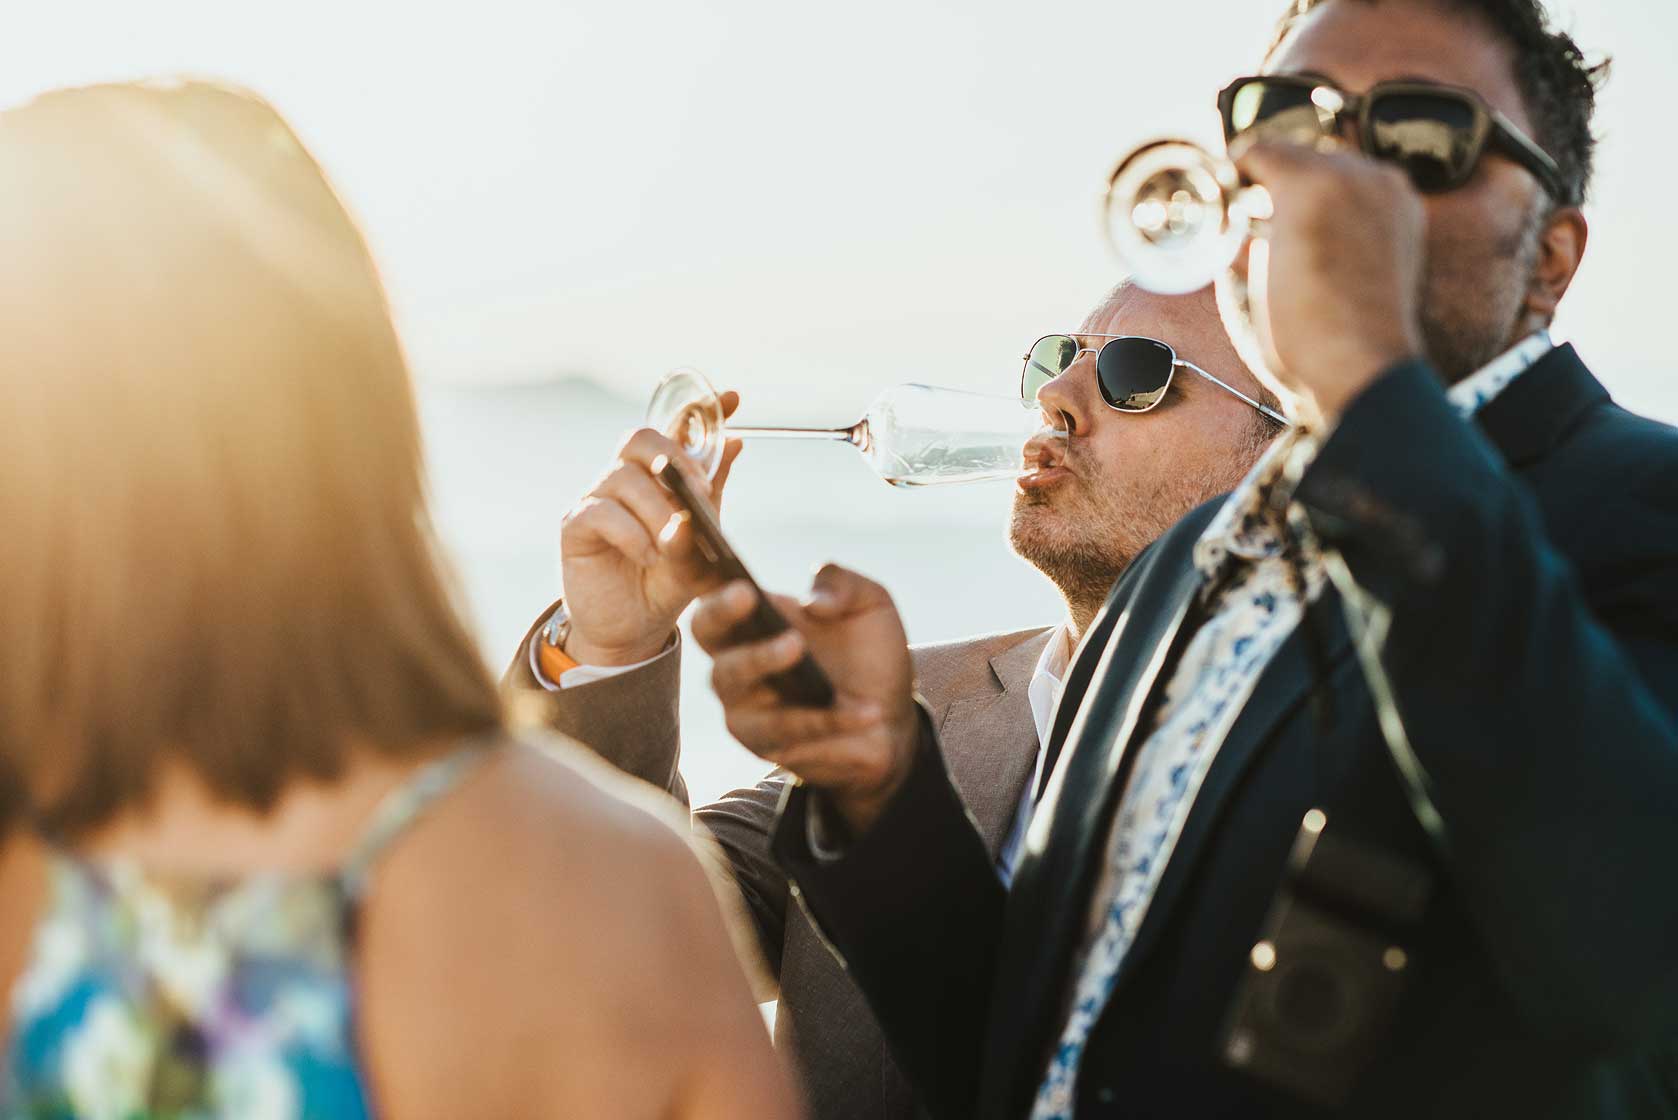 Reportage Wedding Photography at Venetsanos Winery